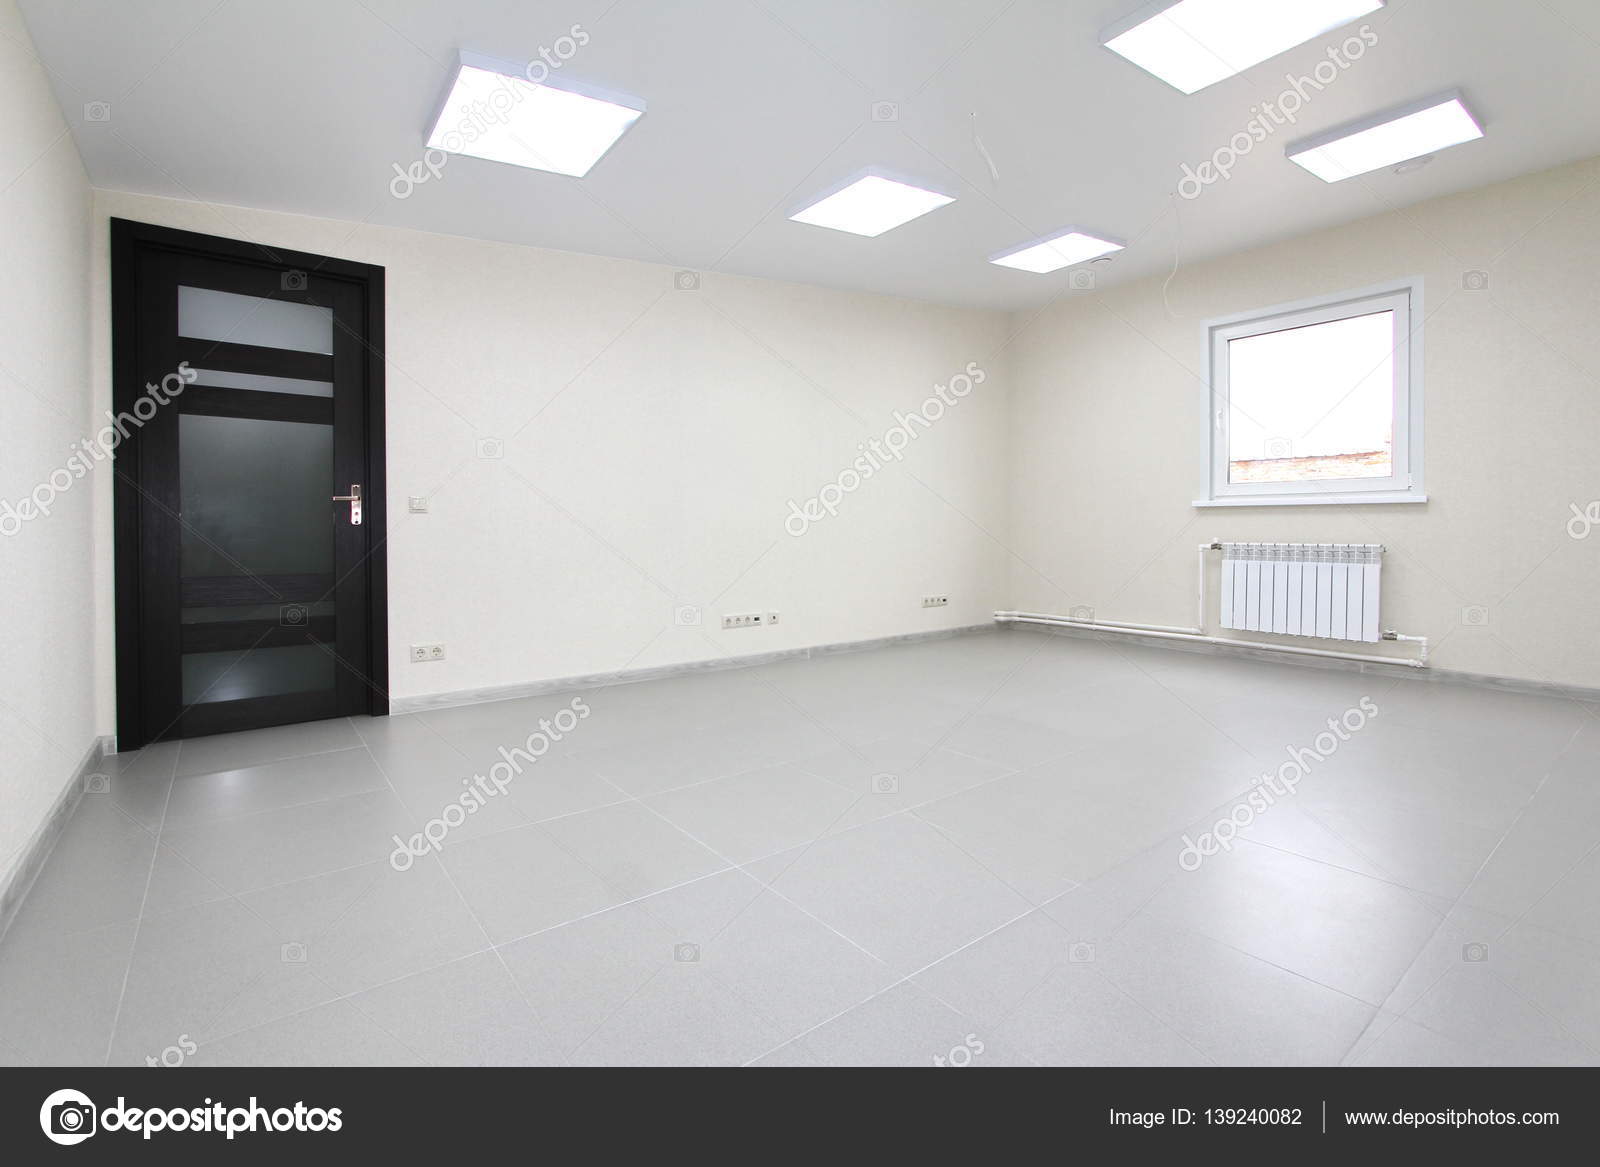 depositphotos_139240082 stock photo interior empty office light room